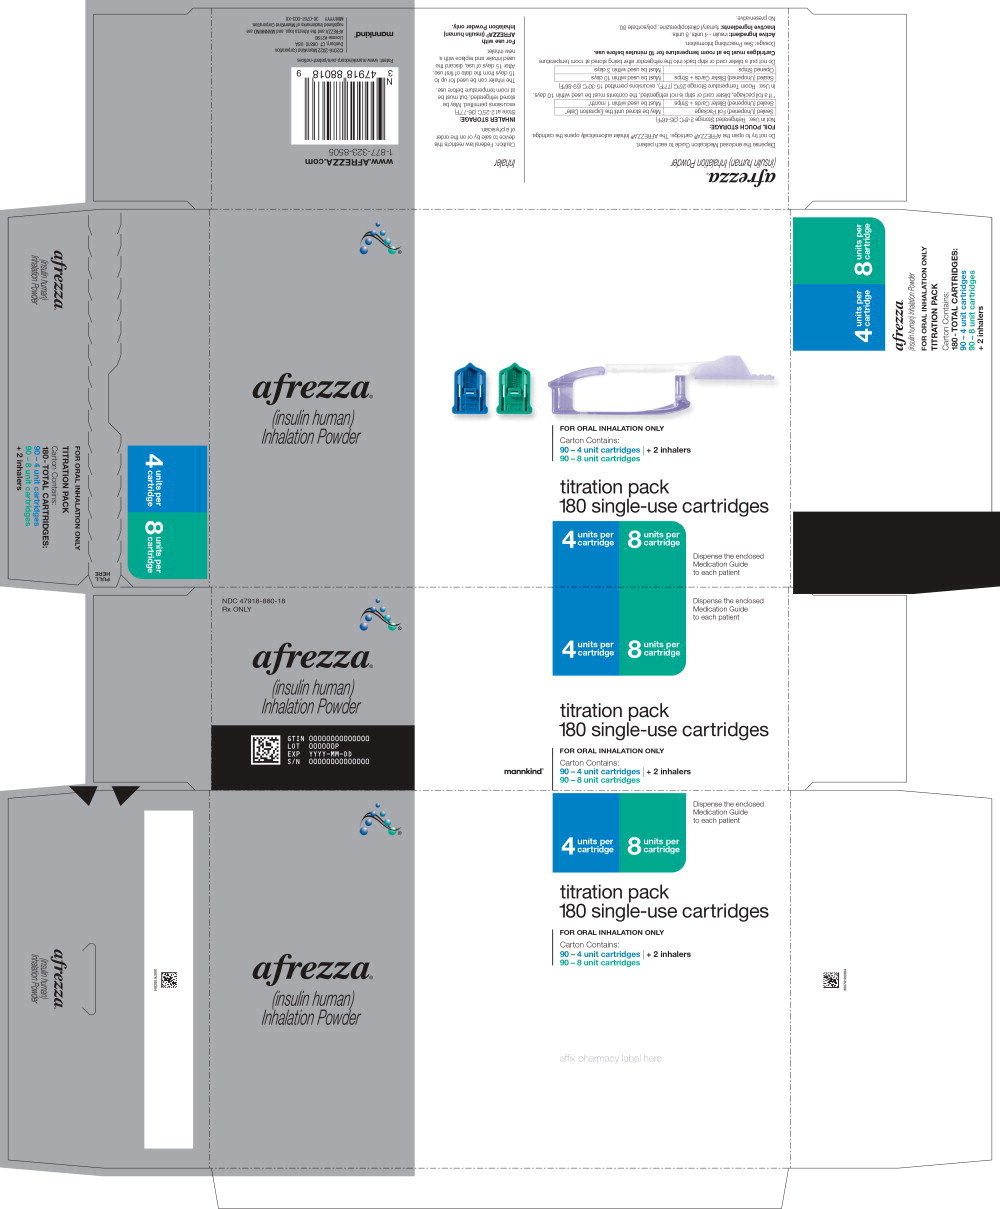 Principal Display Panel 180 cartridges; 90 – 4 unit cartridges and 90 – 8 unit cartridges and 2 inhalers (Titration Pack)
